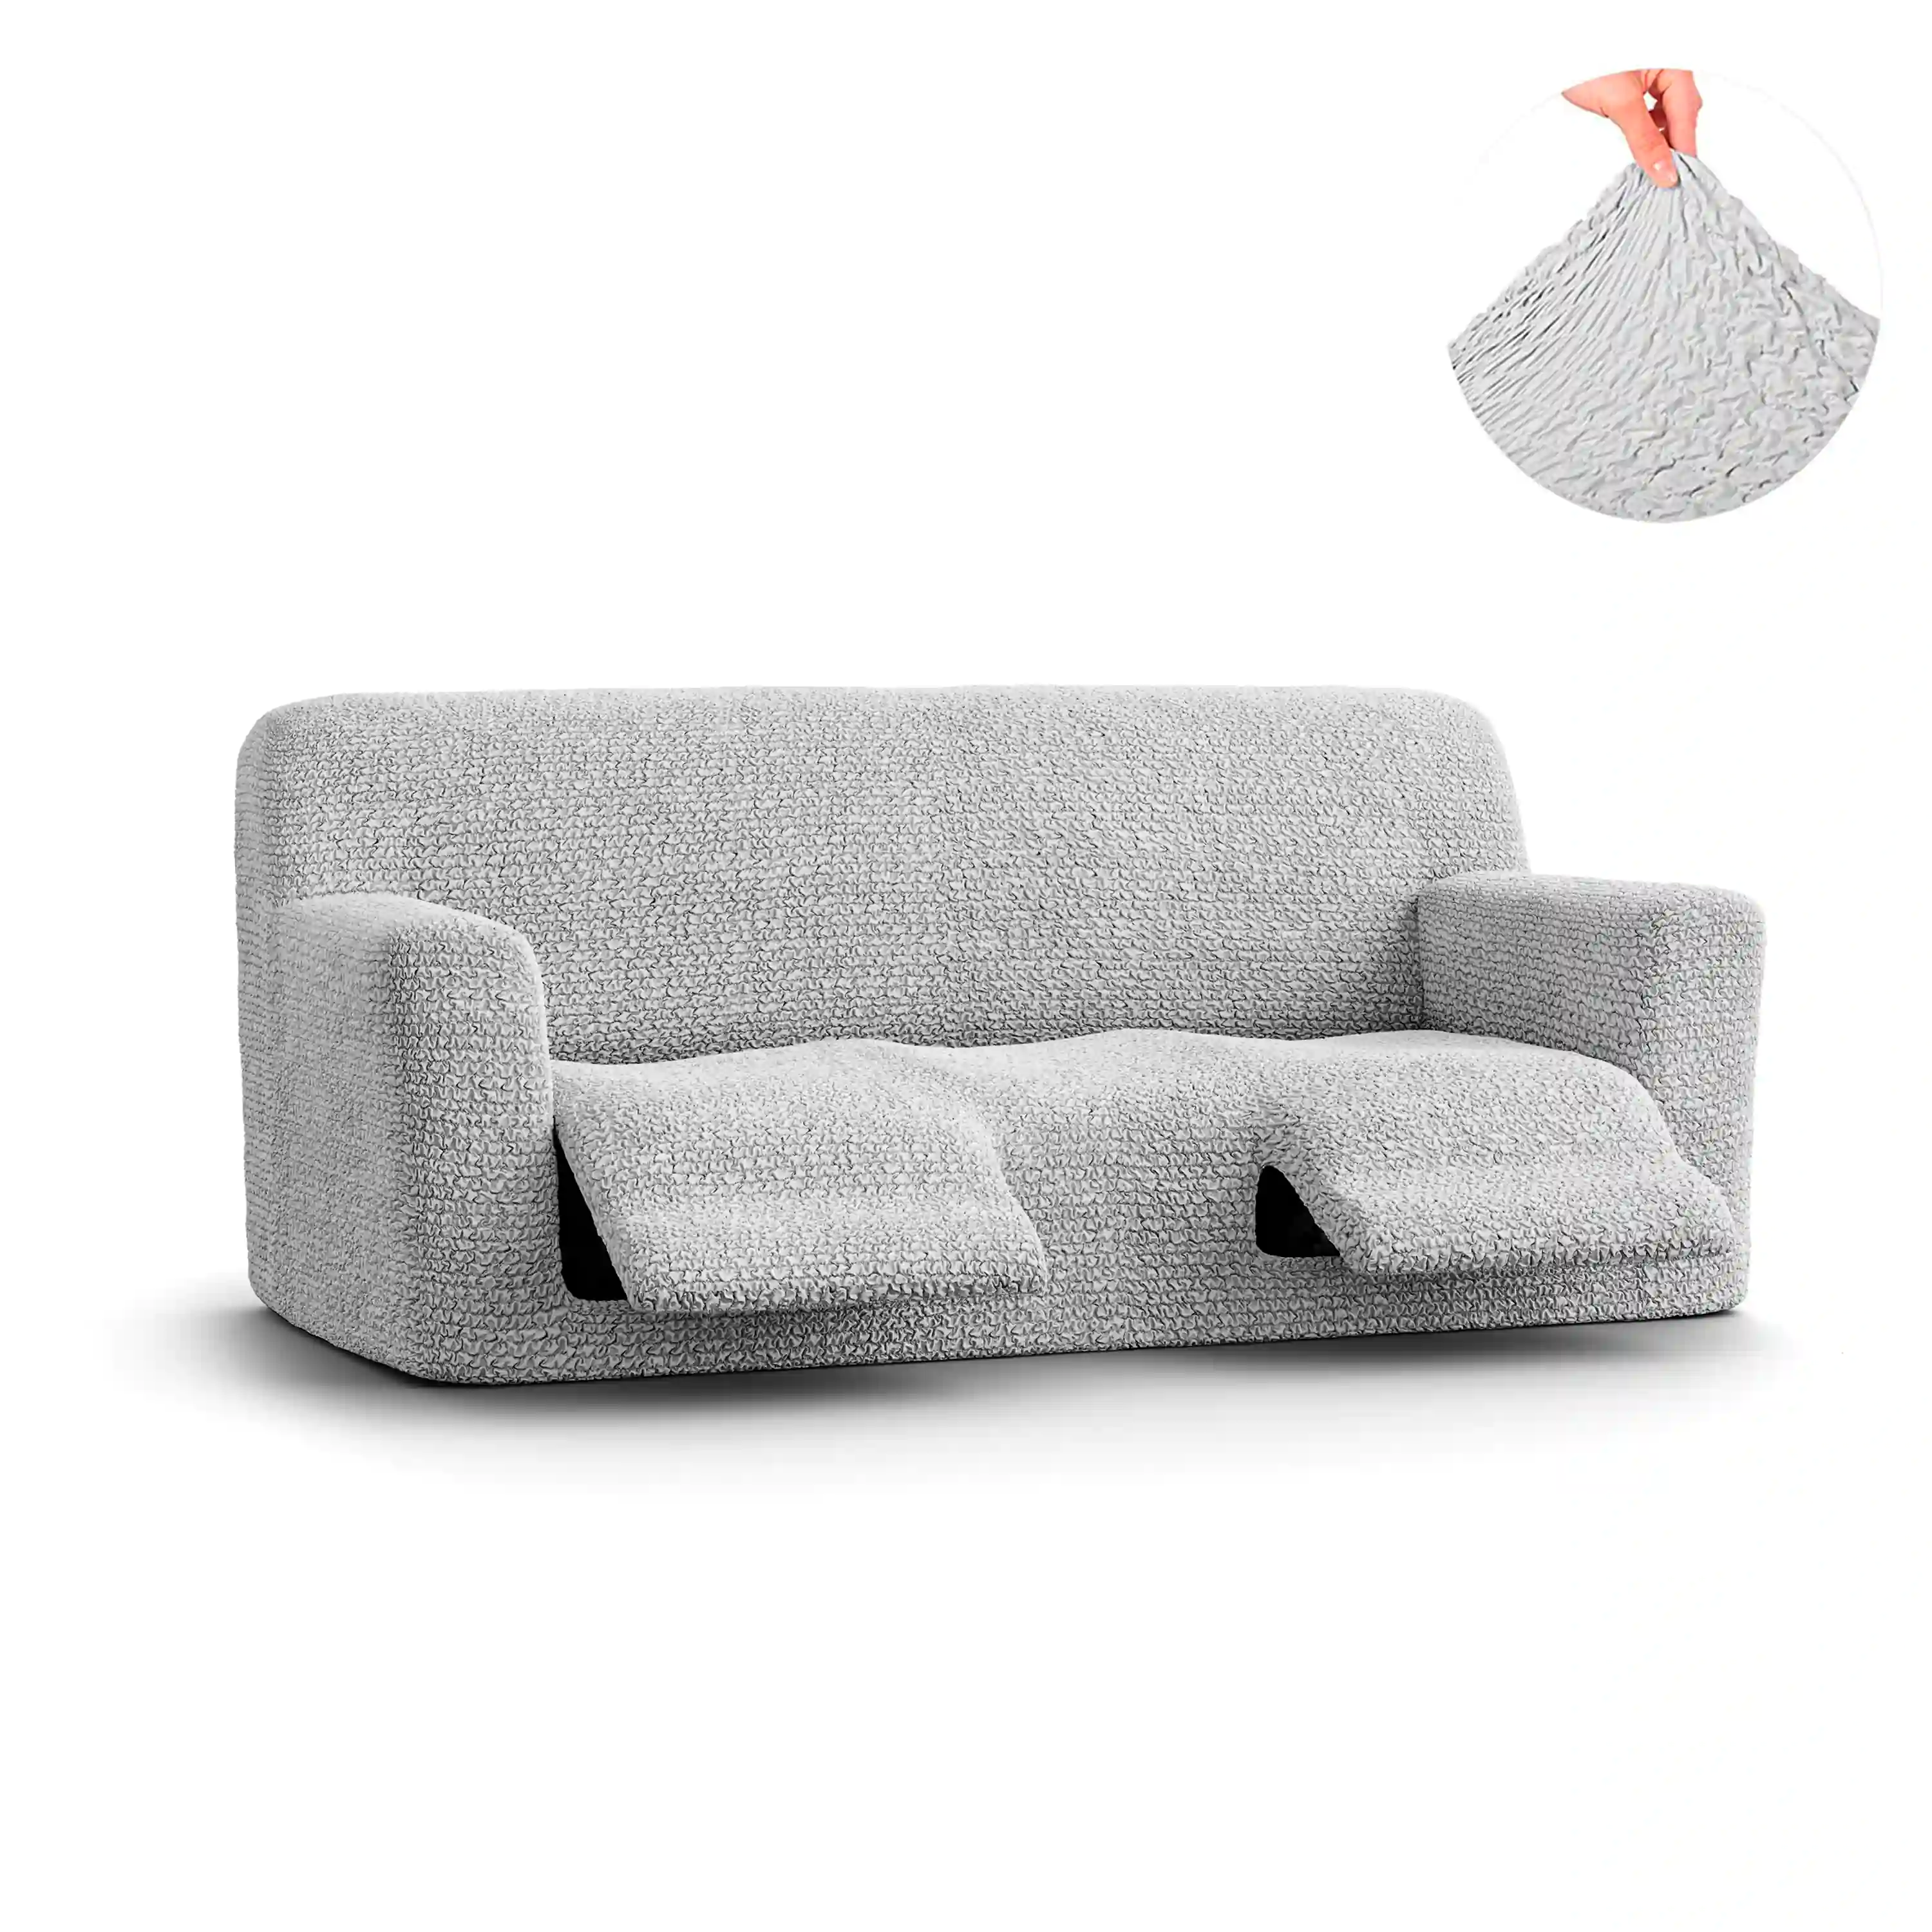 3 Seater Recliner Sofa Cover - Pearl, Microfibra